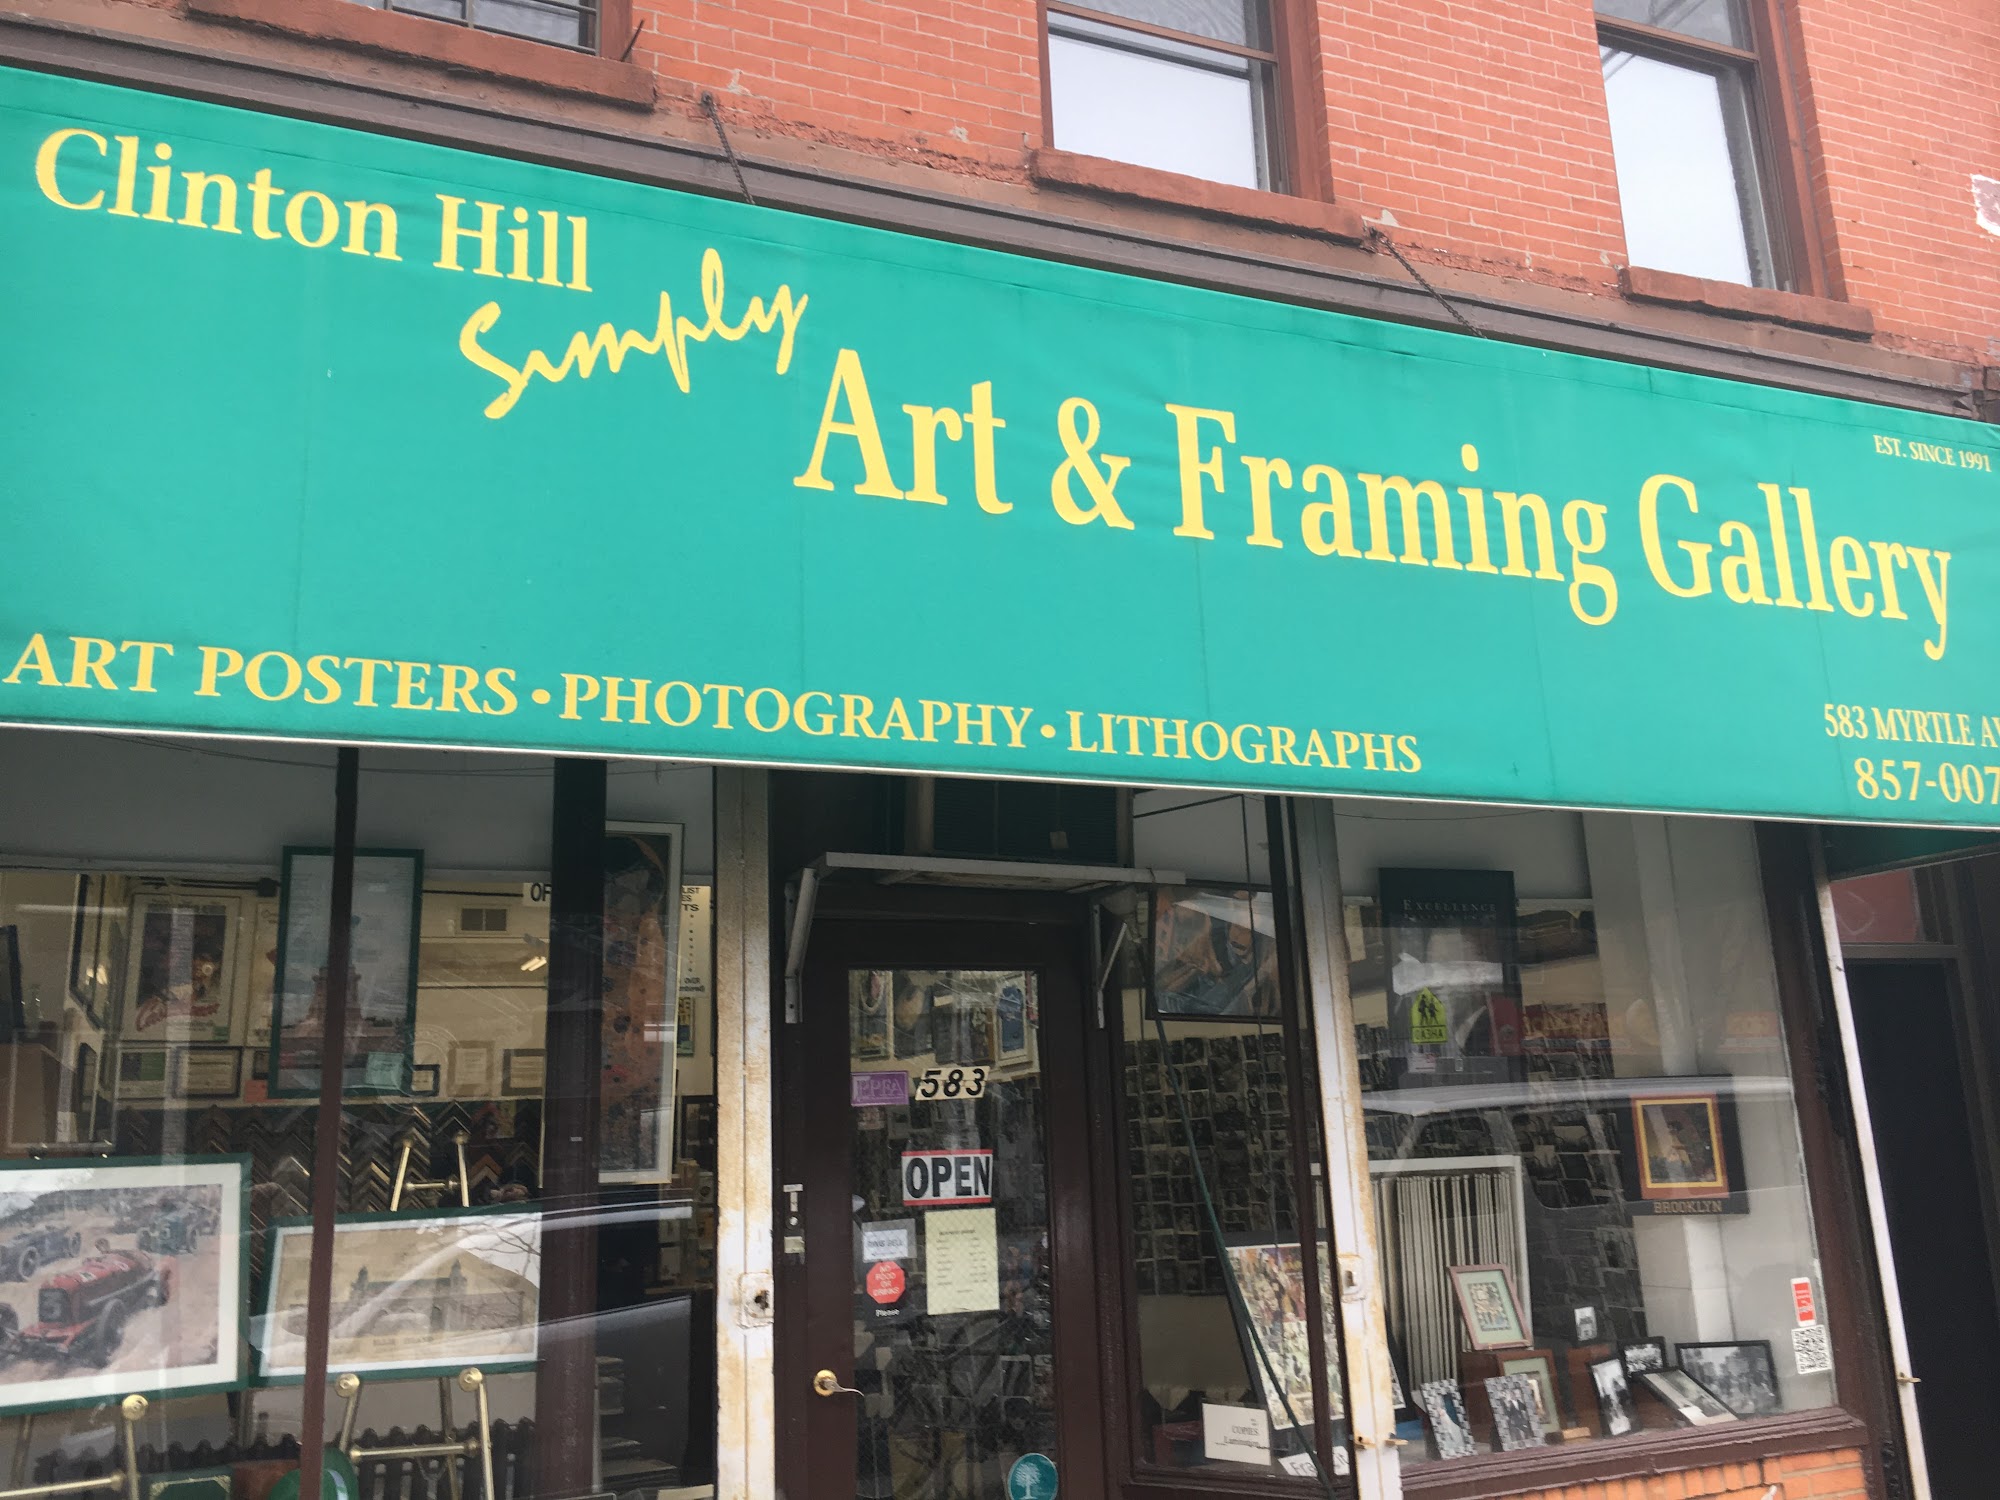 Clinton Hill Simply Art & Framing Gallery